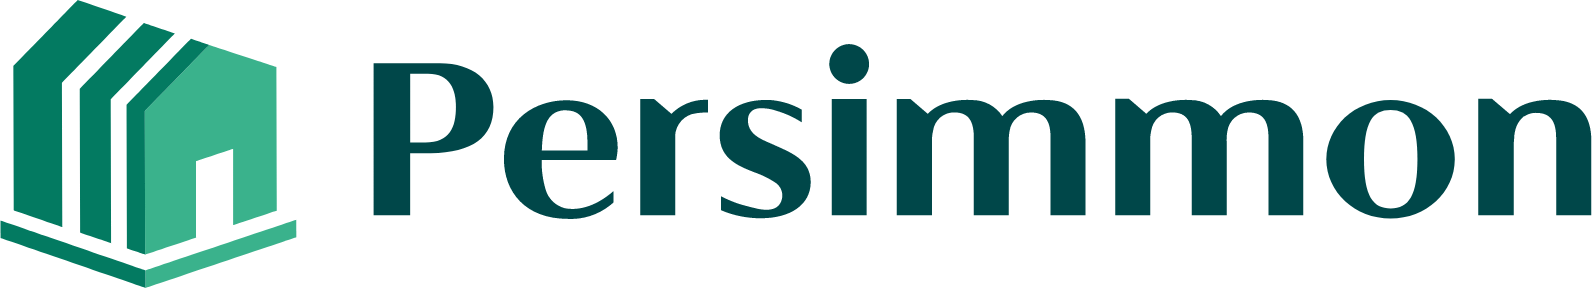 Persimmon logo large (transparent PNG)